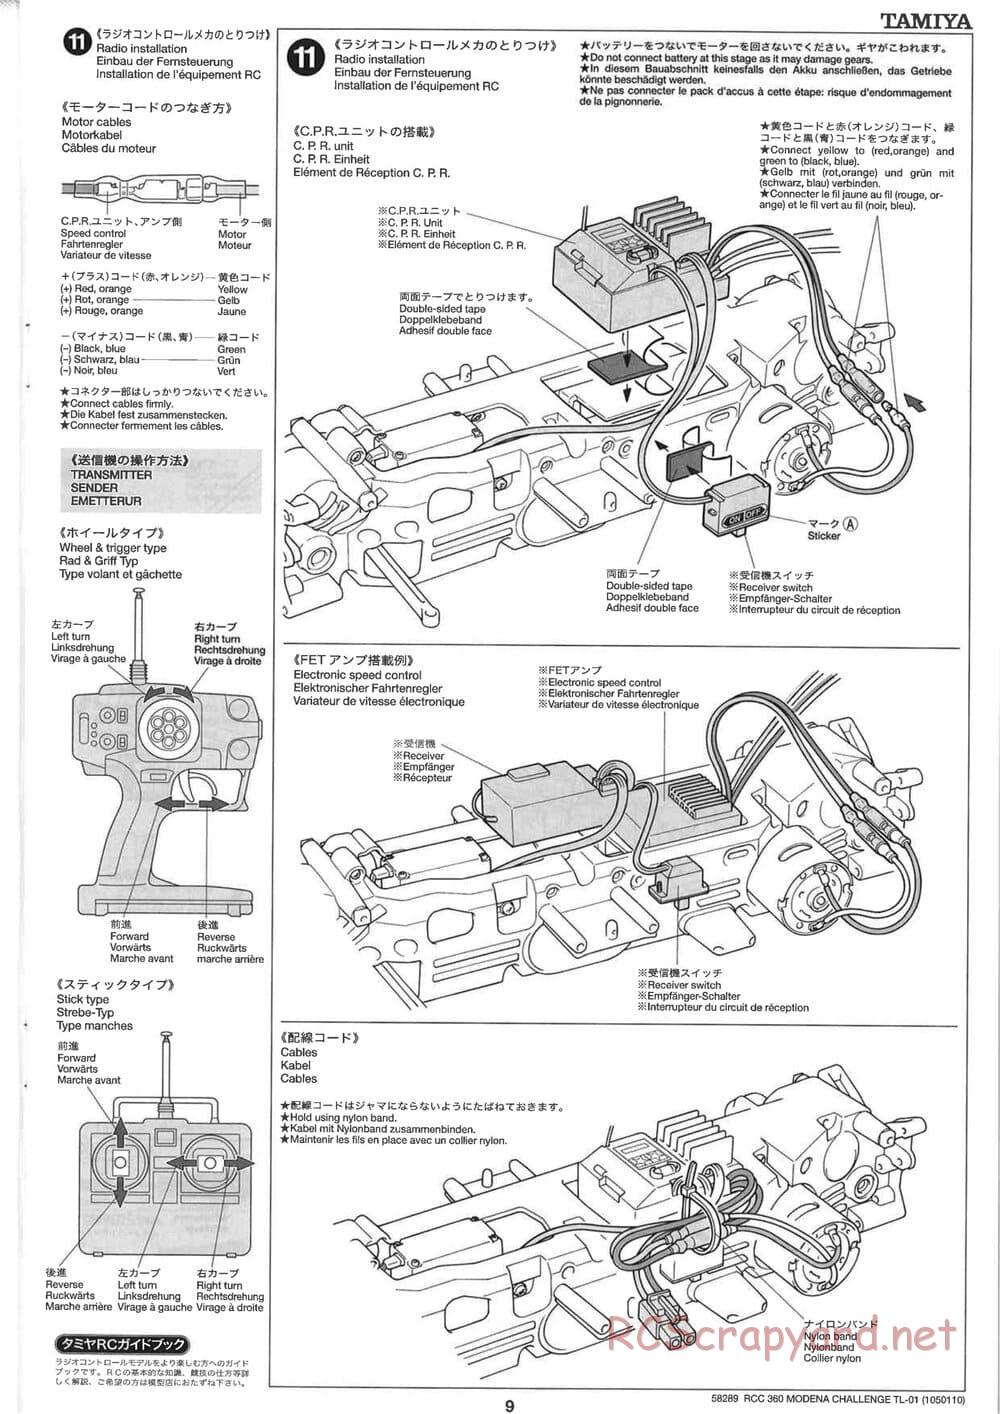 Tamiya - Ferrari 360 Modena Challenge - TL-01 Chassis - Manual - Page 9